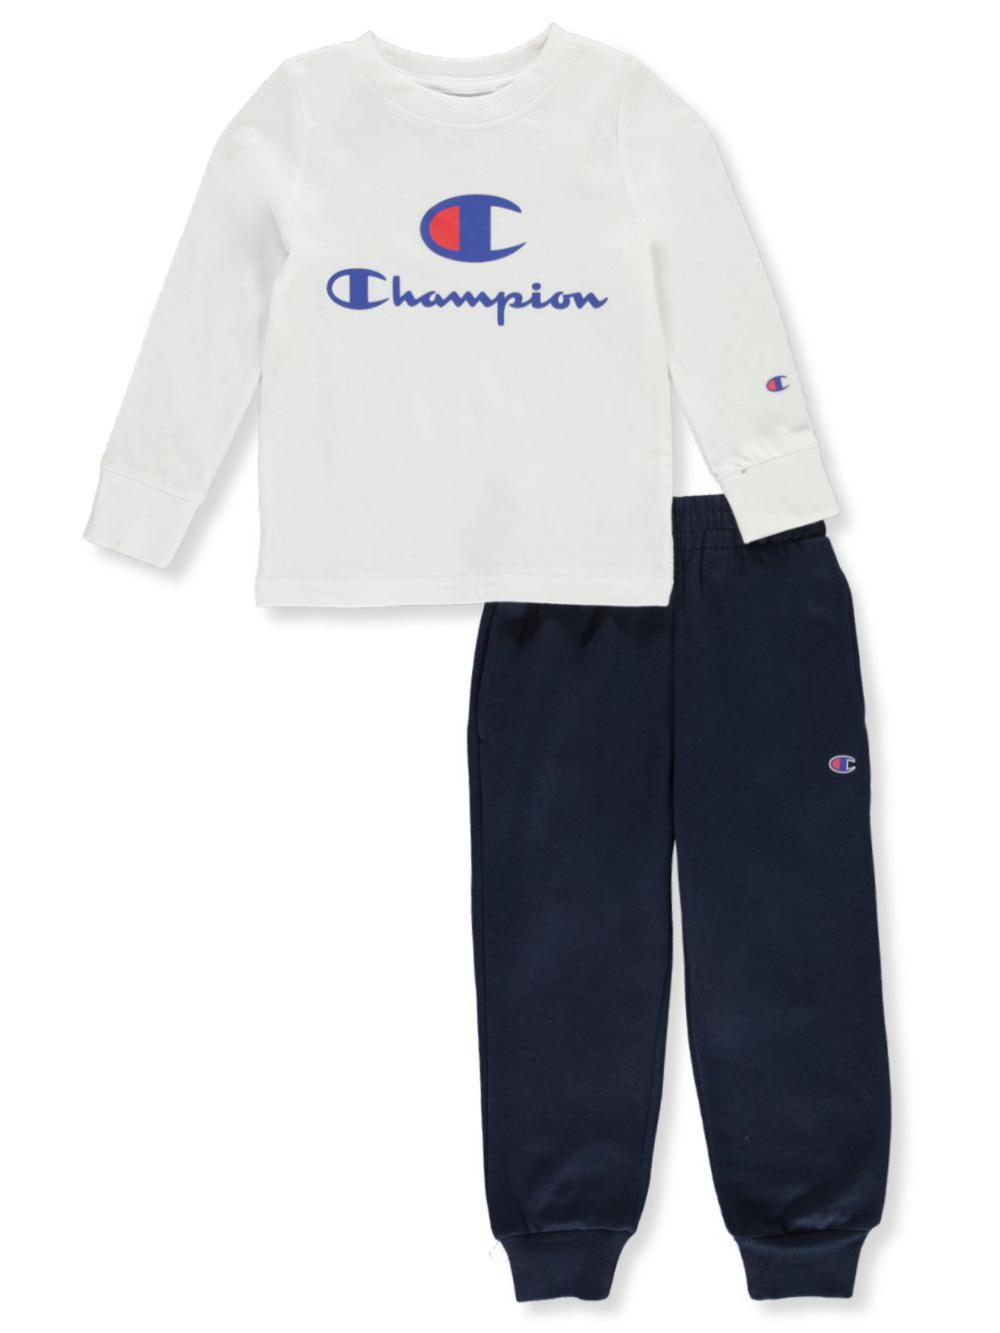 champion sweatsuit for infants